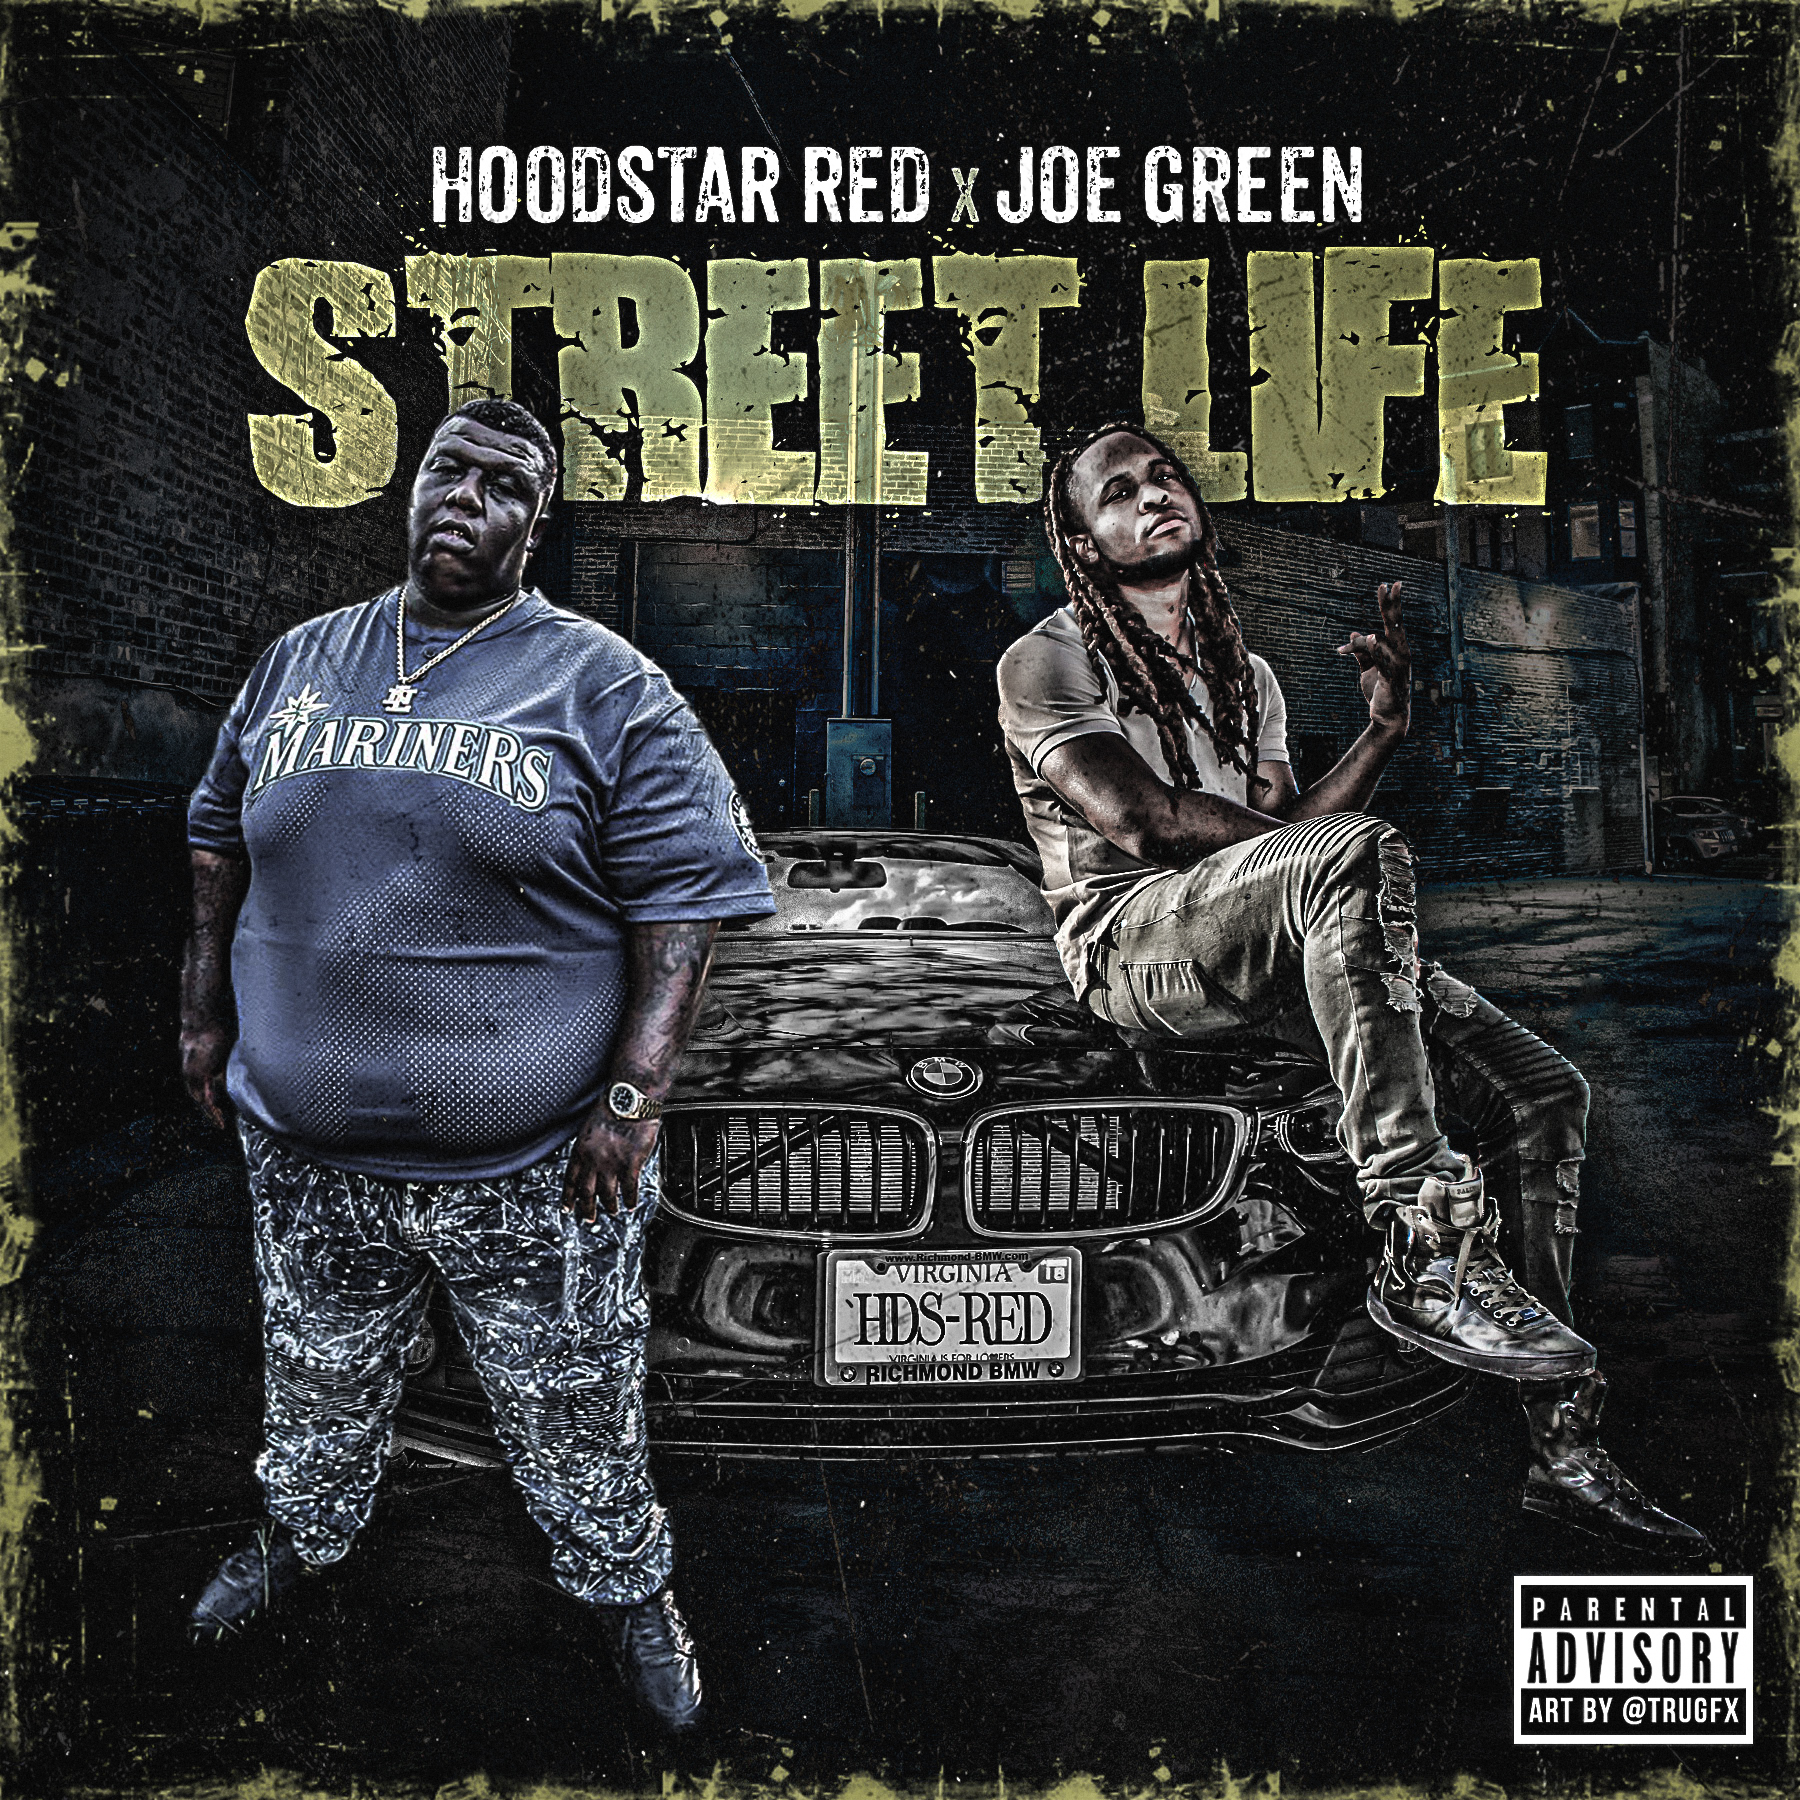 HoodStar Red & Joe Green Spit real Talk with New Single “Street Life” @Hoodstarred